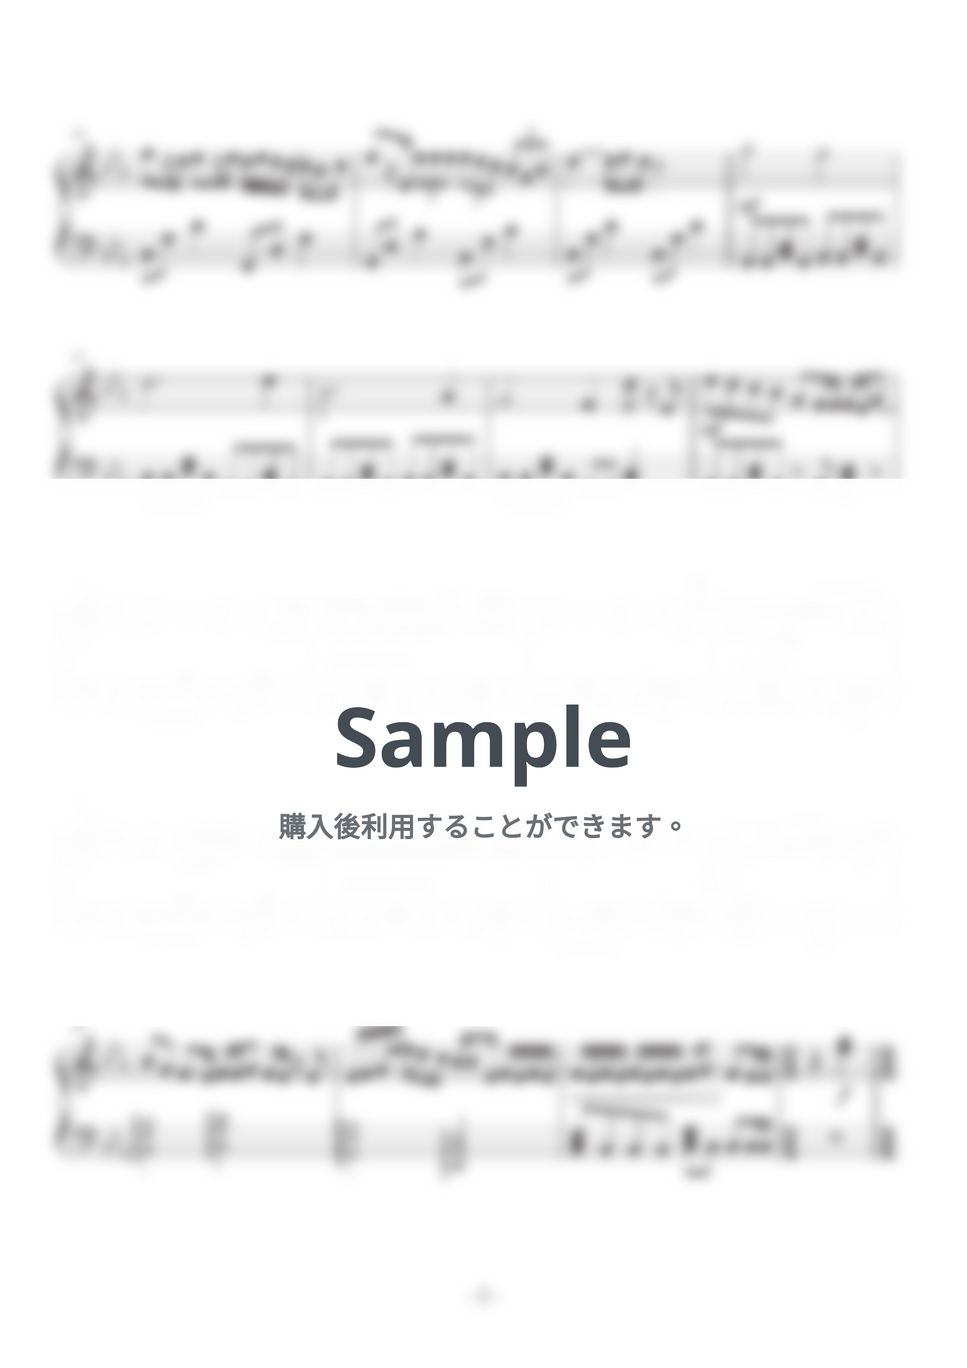 back number - 冬と春 (ピアノソロ / 初級) by Kanna Inoue